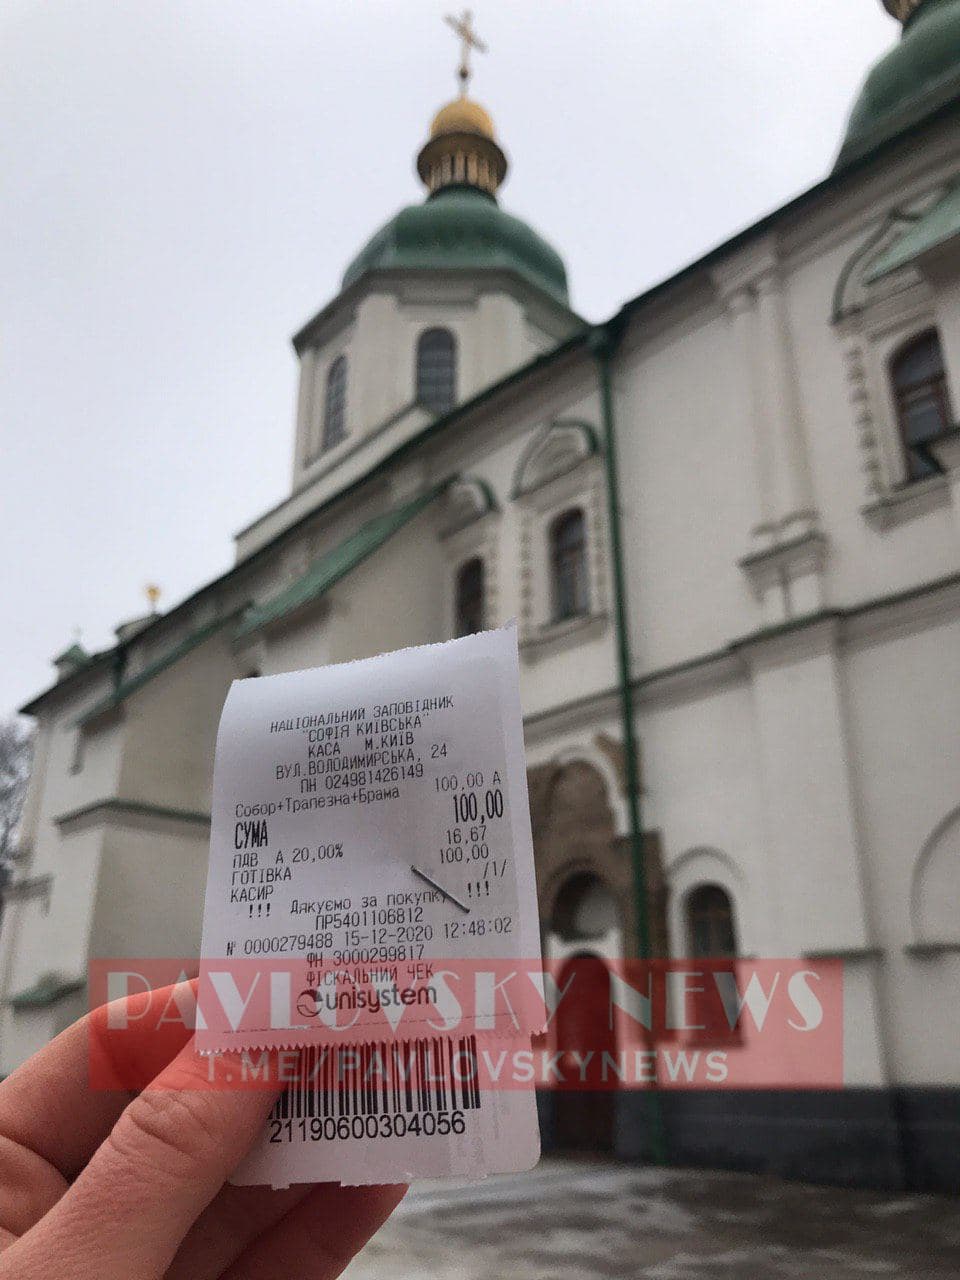 Билет в церковь. Скриншот https://t.me/pavlovskynews